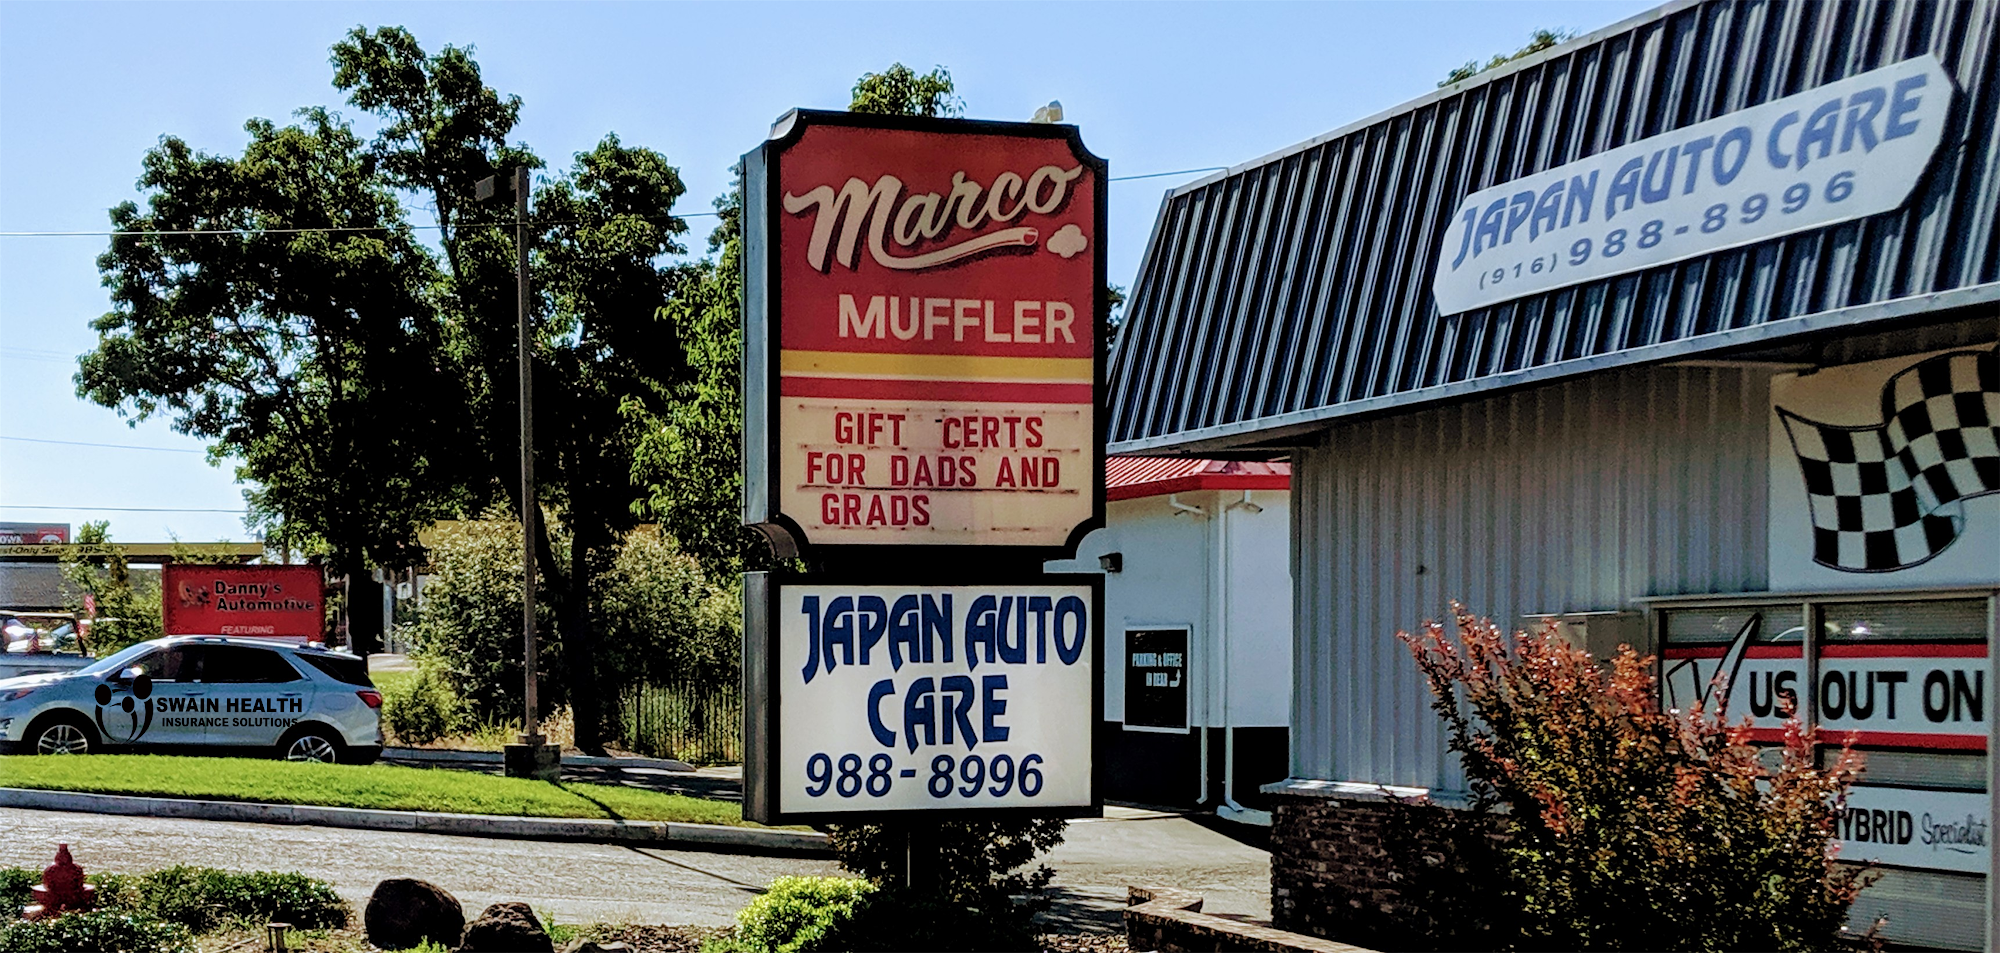 Marco Muffler Inc.